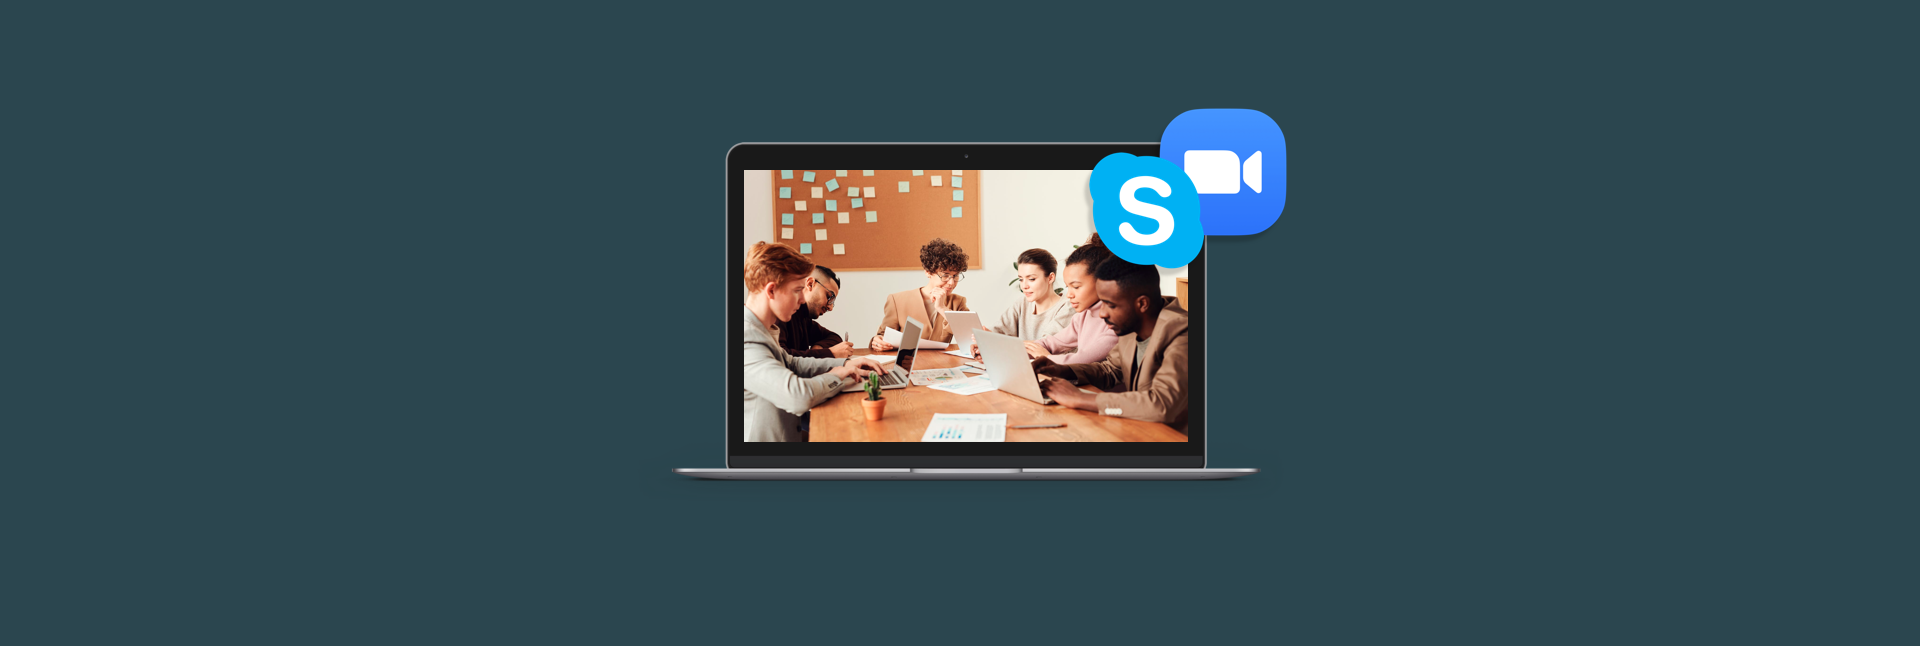 video conversation for mac